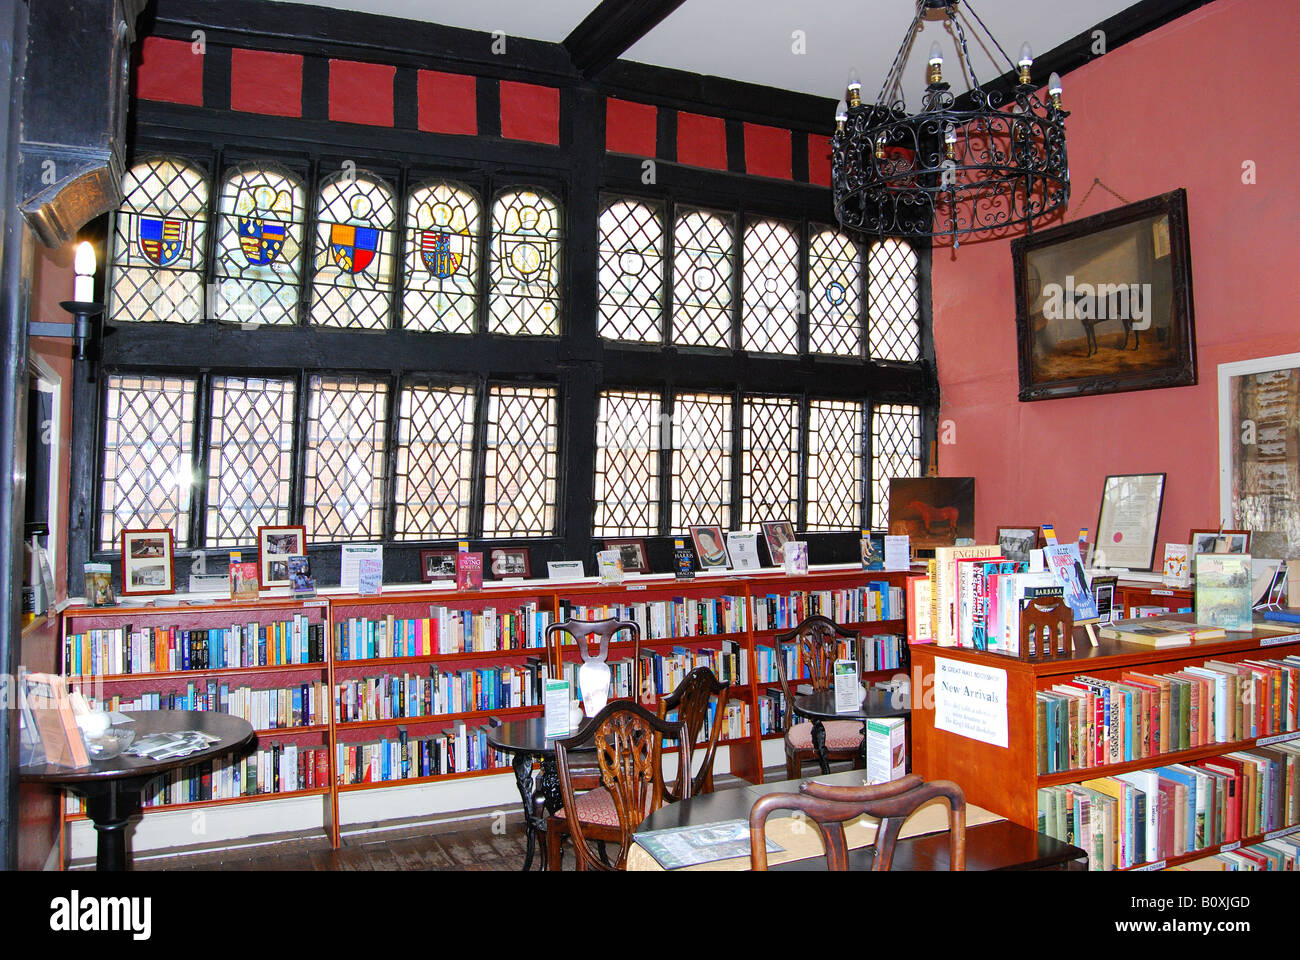 Great Hall Bookshop, The King's Head Pub, King's Head Passage, Market Square, Aylesbury, Buckinghamshire, England, United Kingdom Stock Photo